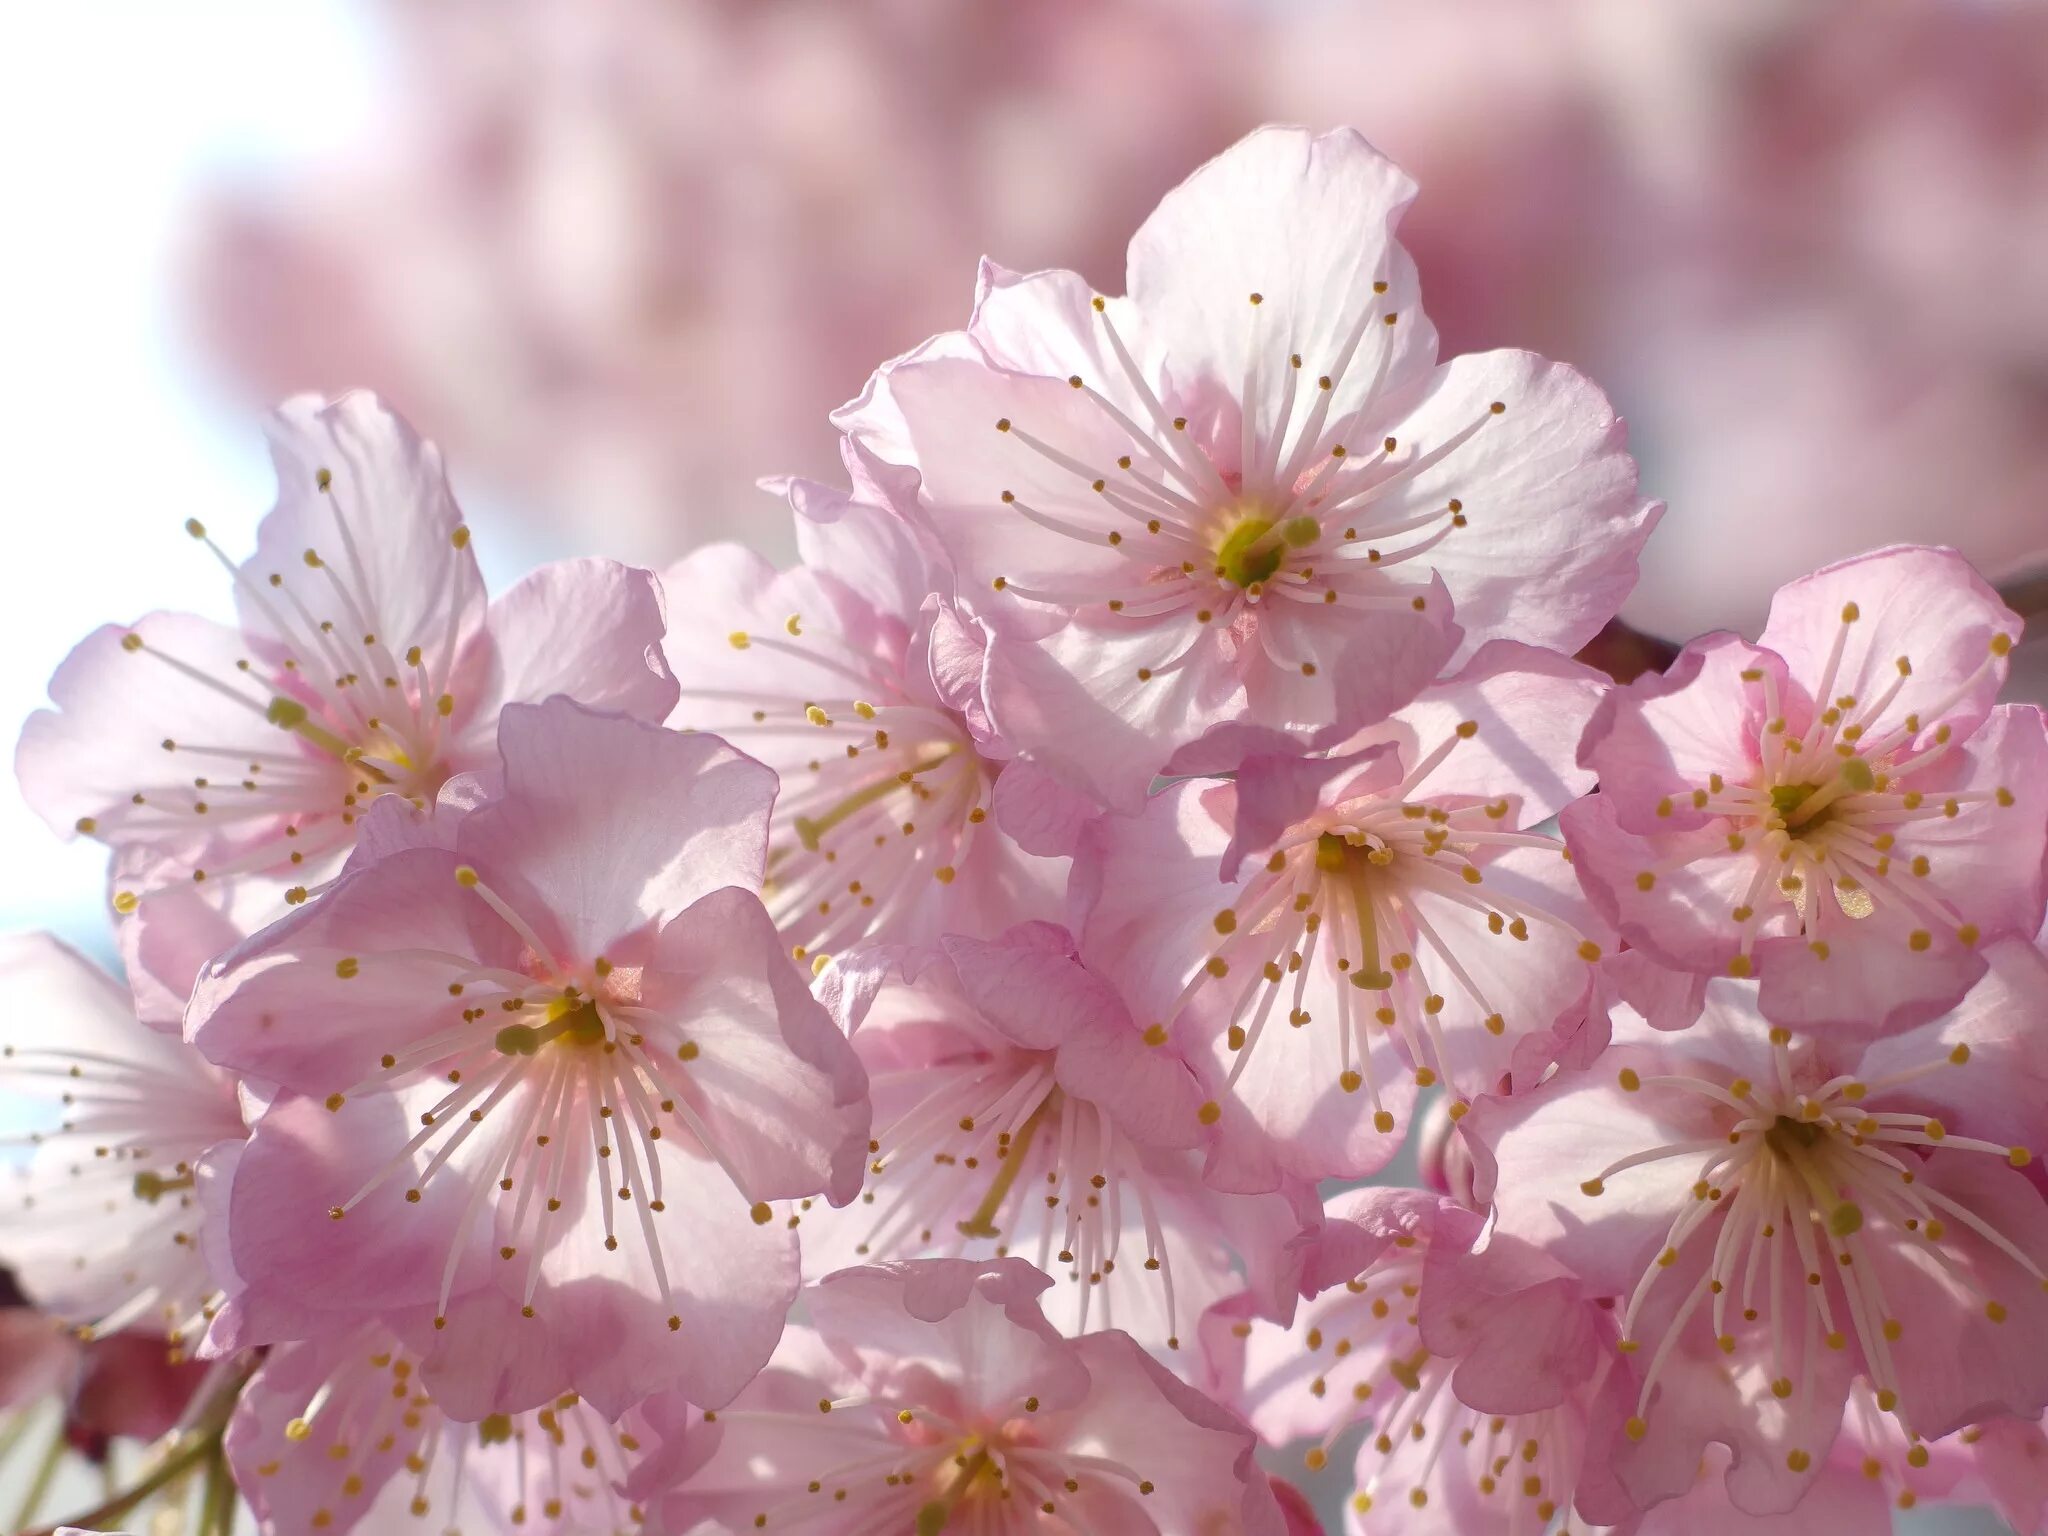 Сакура крупно. Цветы Сакуры. Цветы вишни. Цветение вишни. Вишни в цвету.